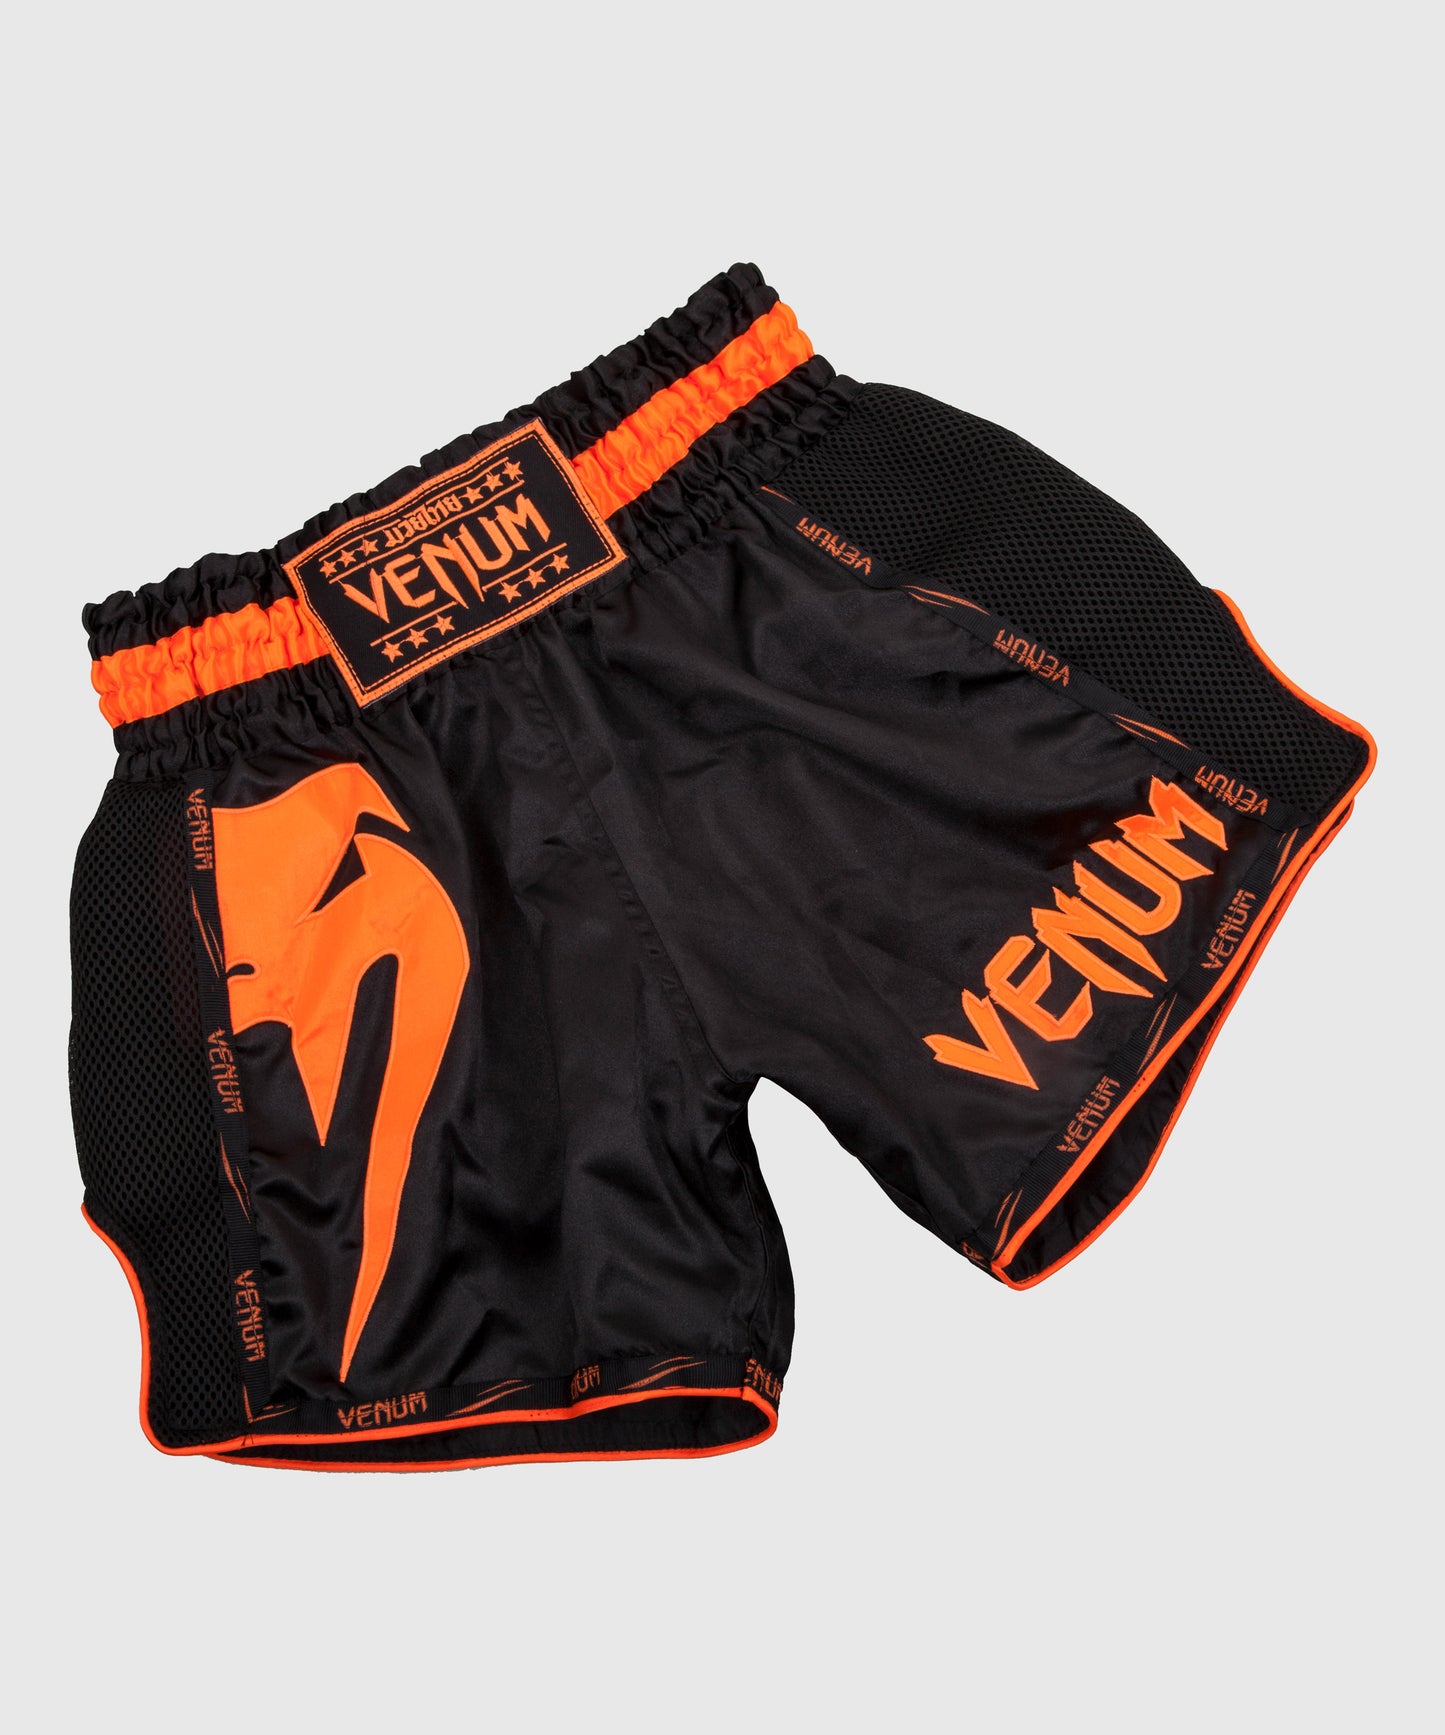 Venum Giant Muay Thai Shorts